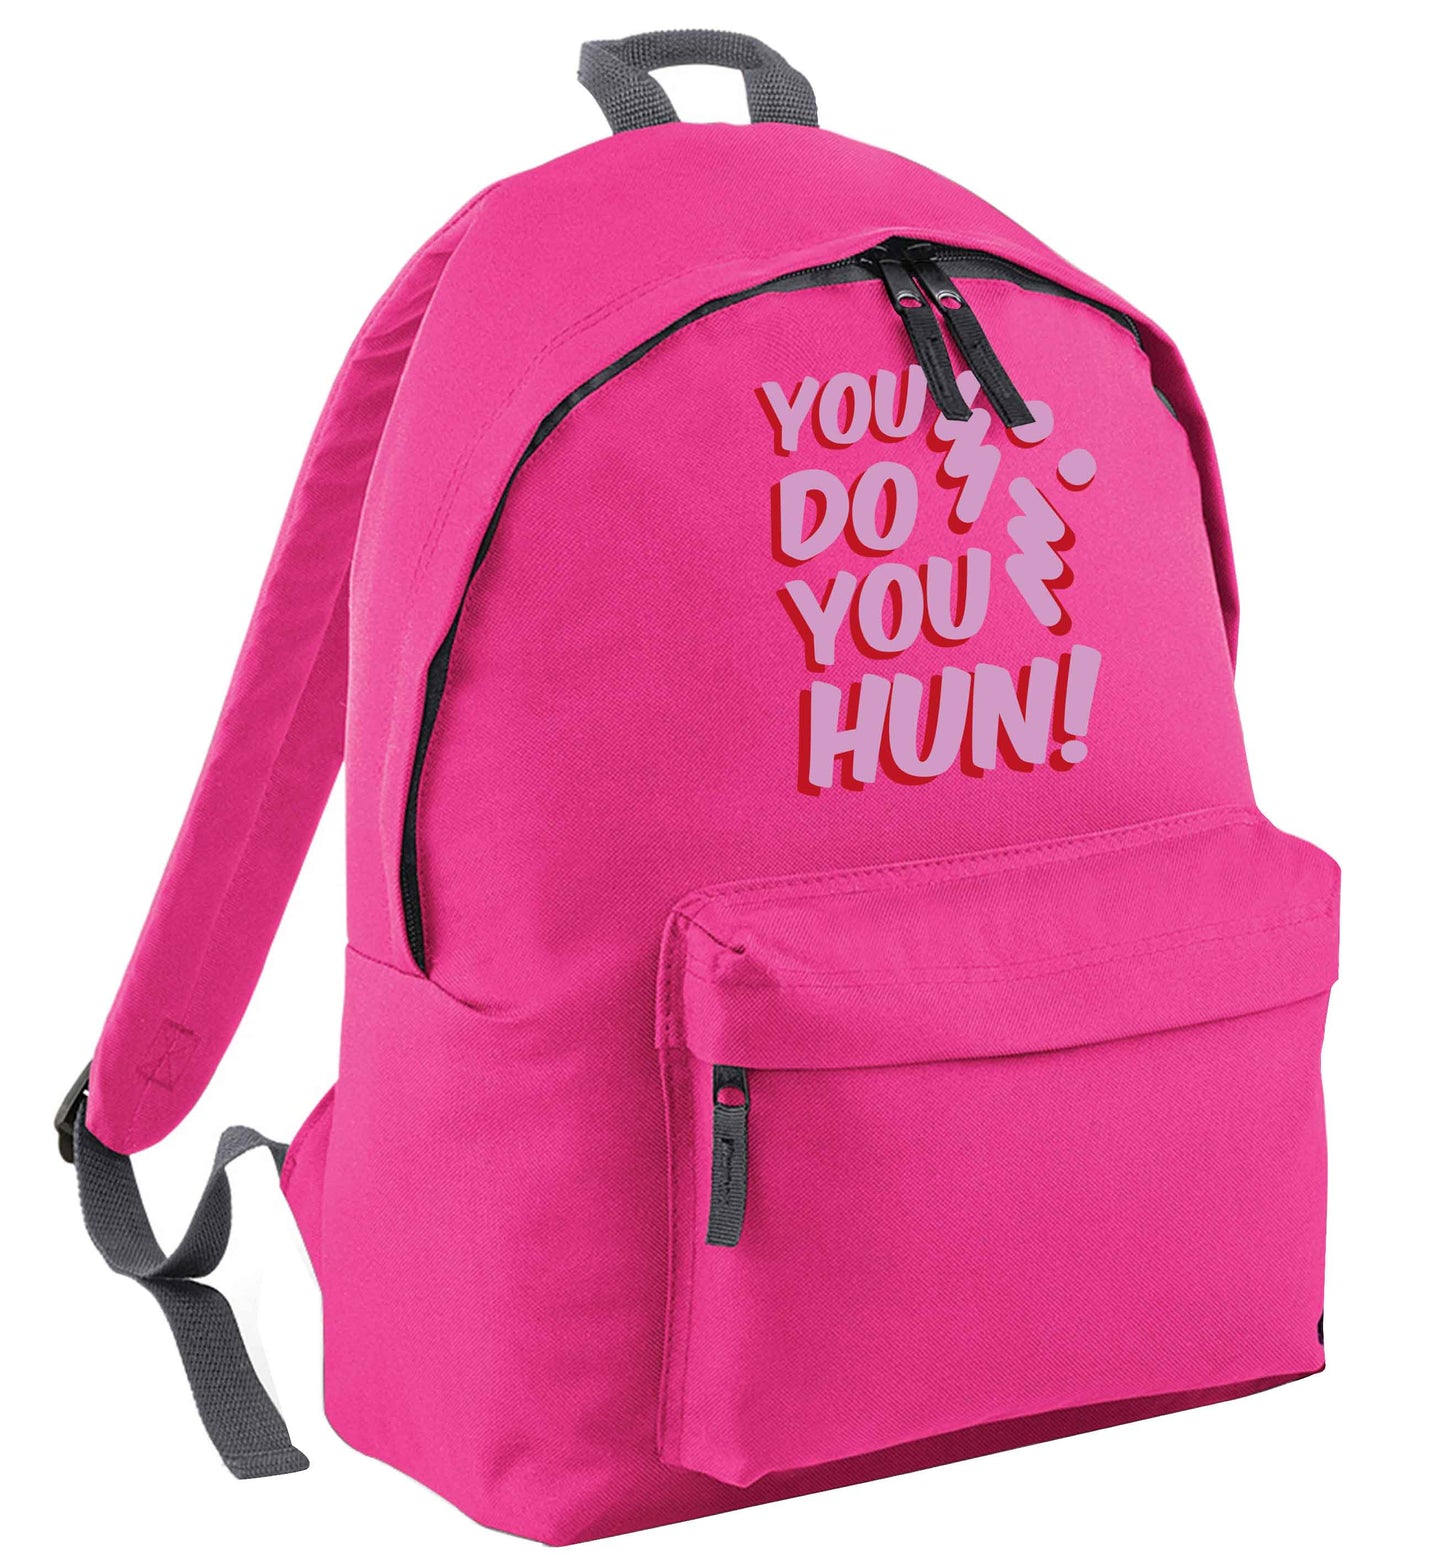 You do you hun | Children's backpack